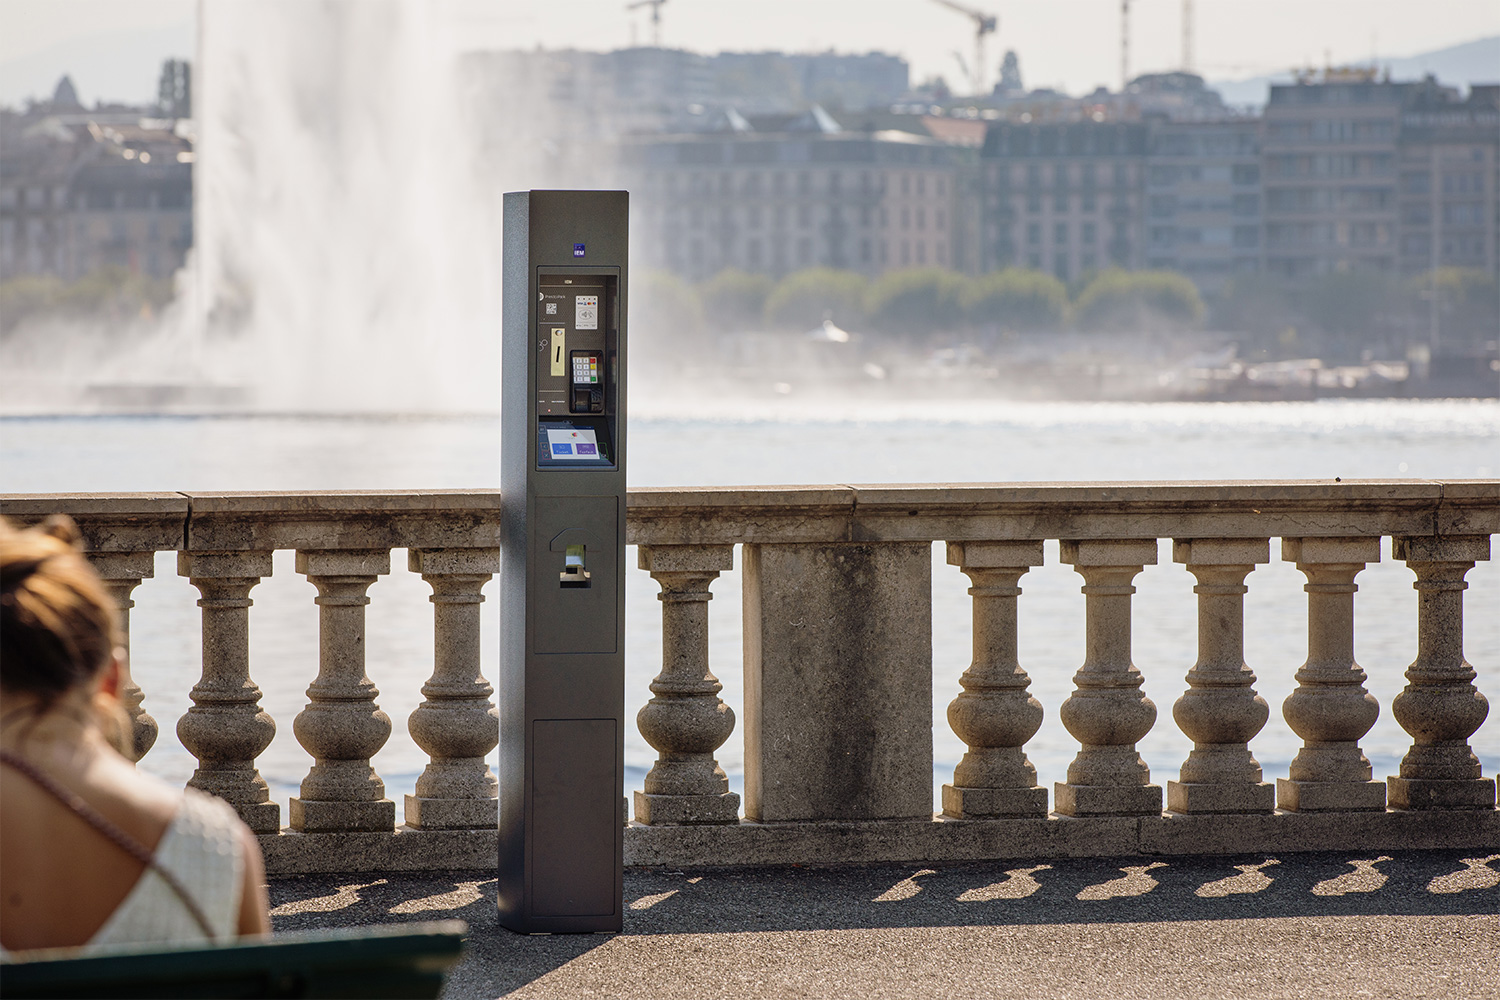 IEM is introducing a new generation of PrestoInteractif parking meters